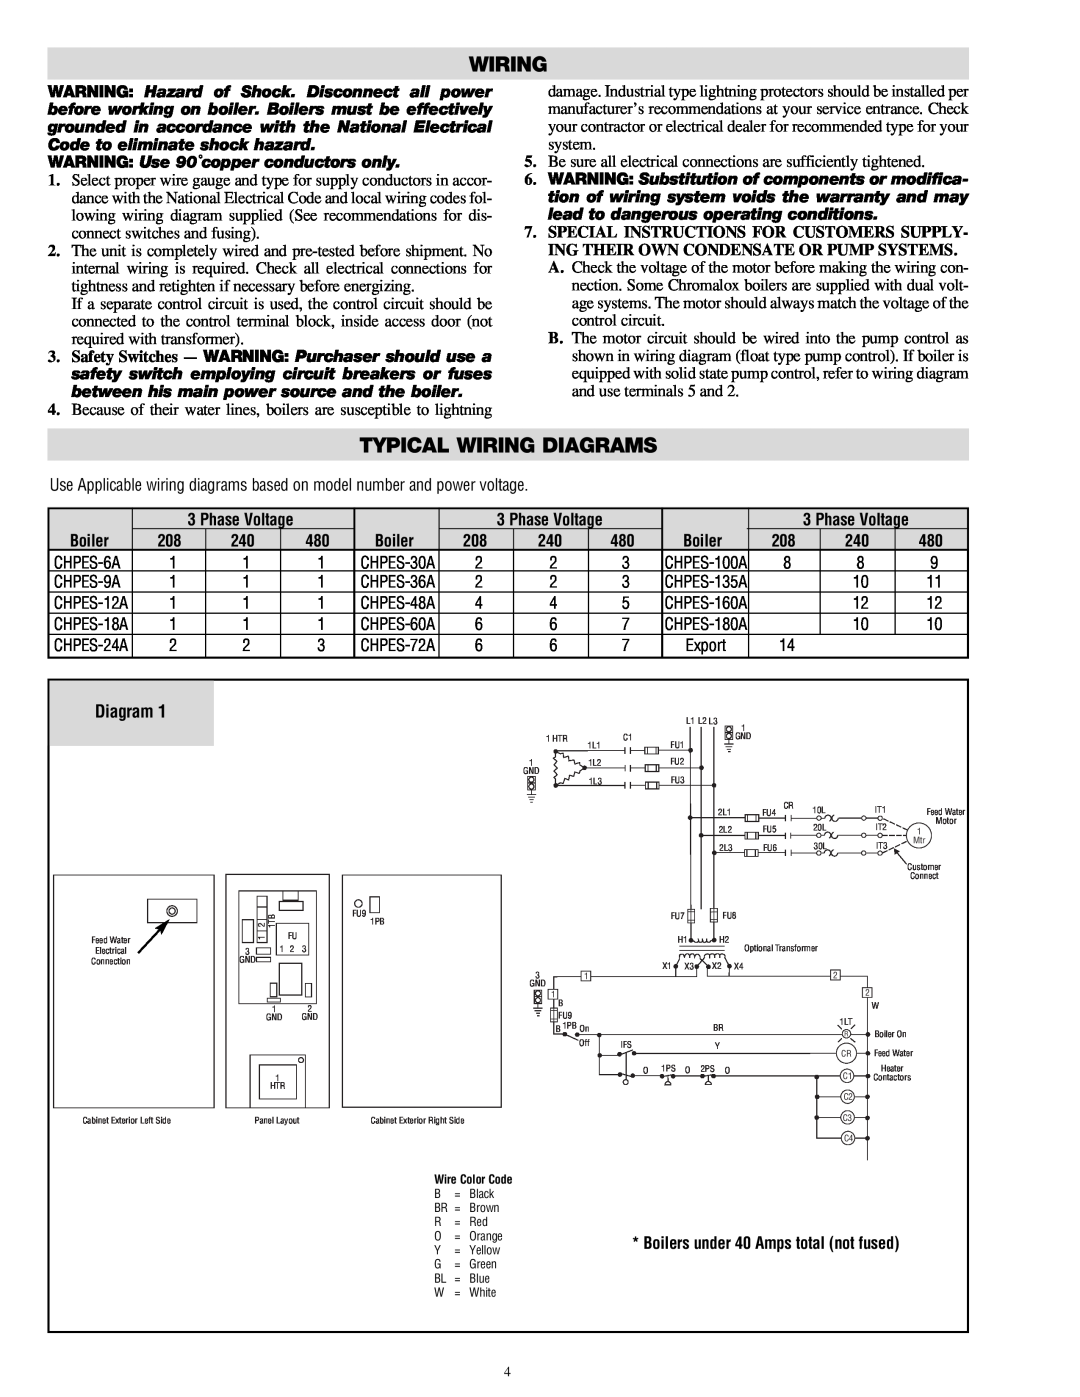 Chromalox CHPES-6A manual Typical Wiring Diagrams, Boiler 